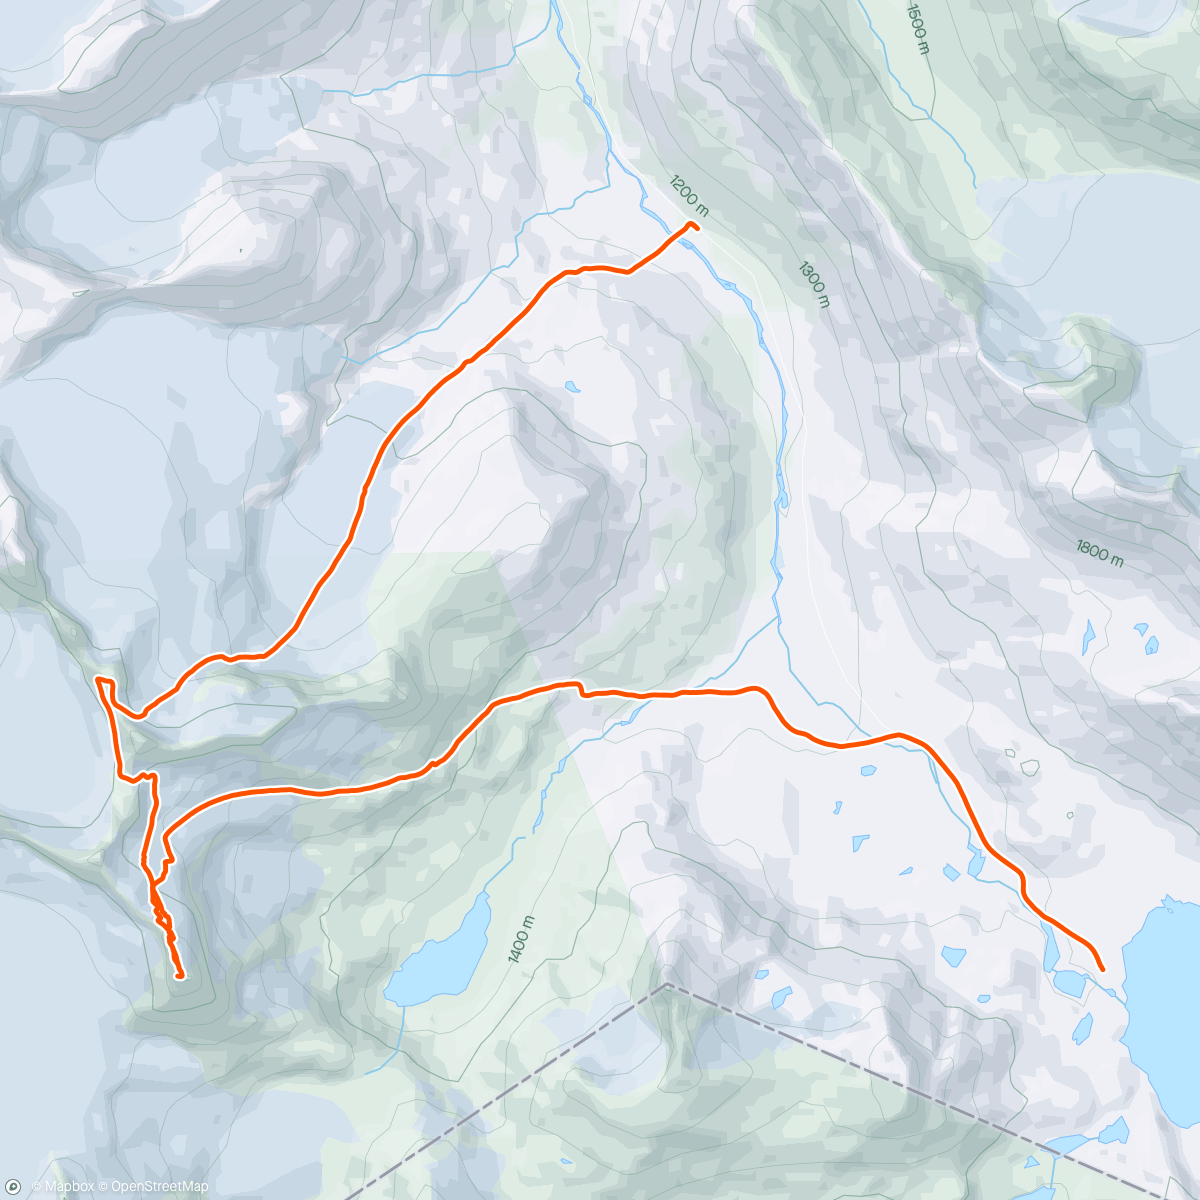 「Storebjørn i ellevilt vær ☀️」活動的地圖